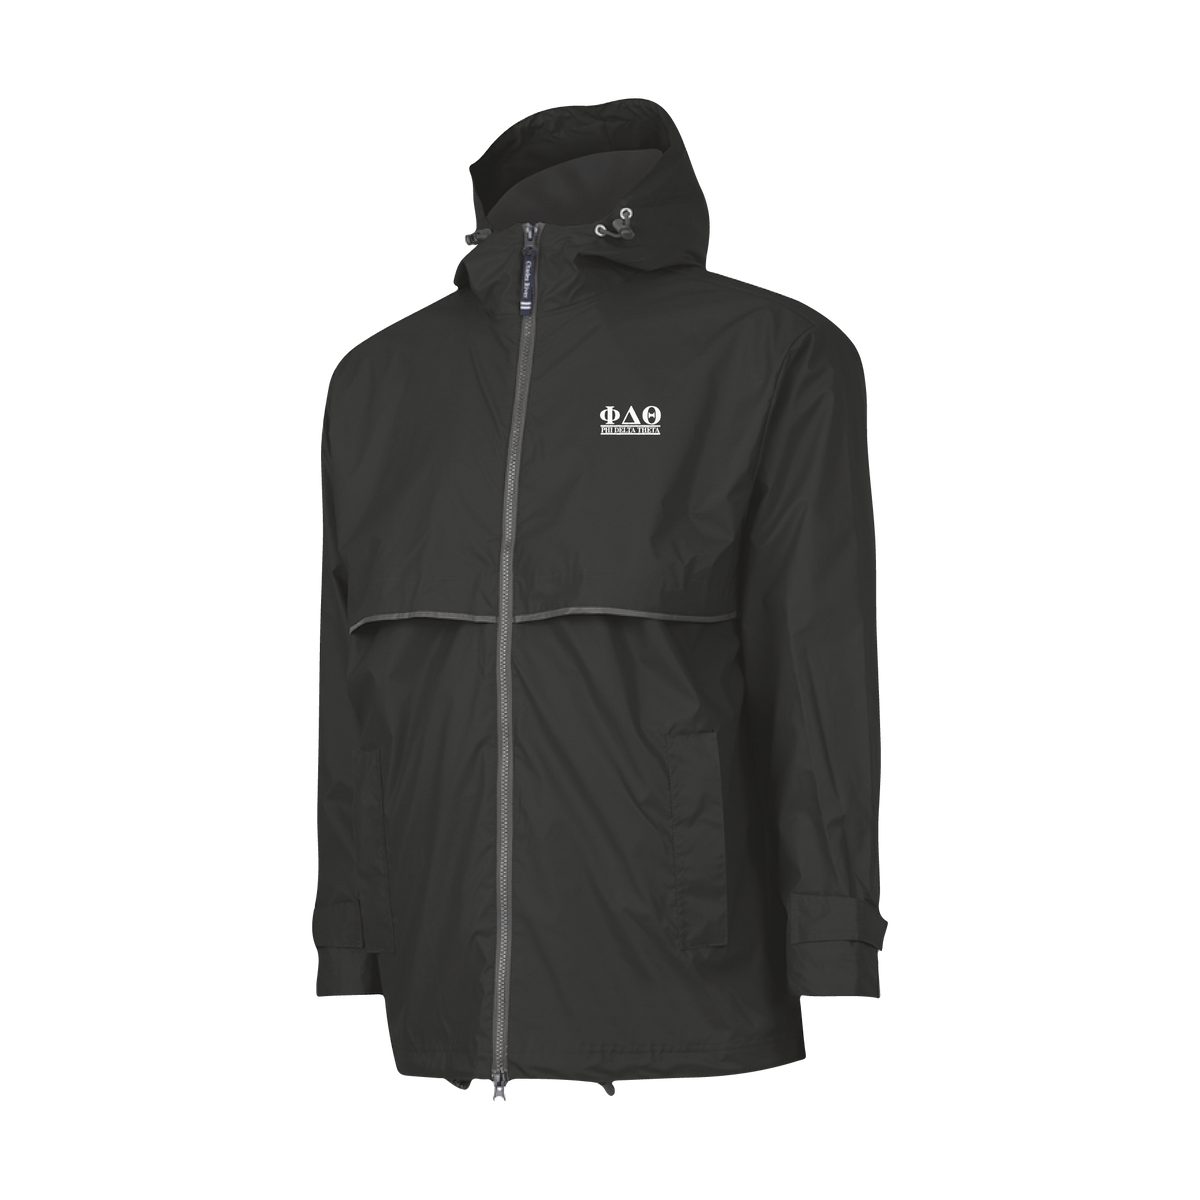 B-Unlimited Greek - Rain Jacket (PDT) - Charles River - 9199 - New Englander Rain Jacket - Black